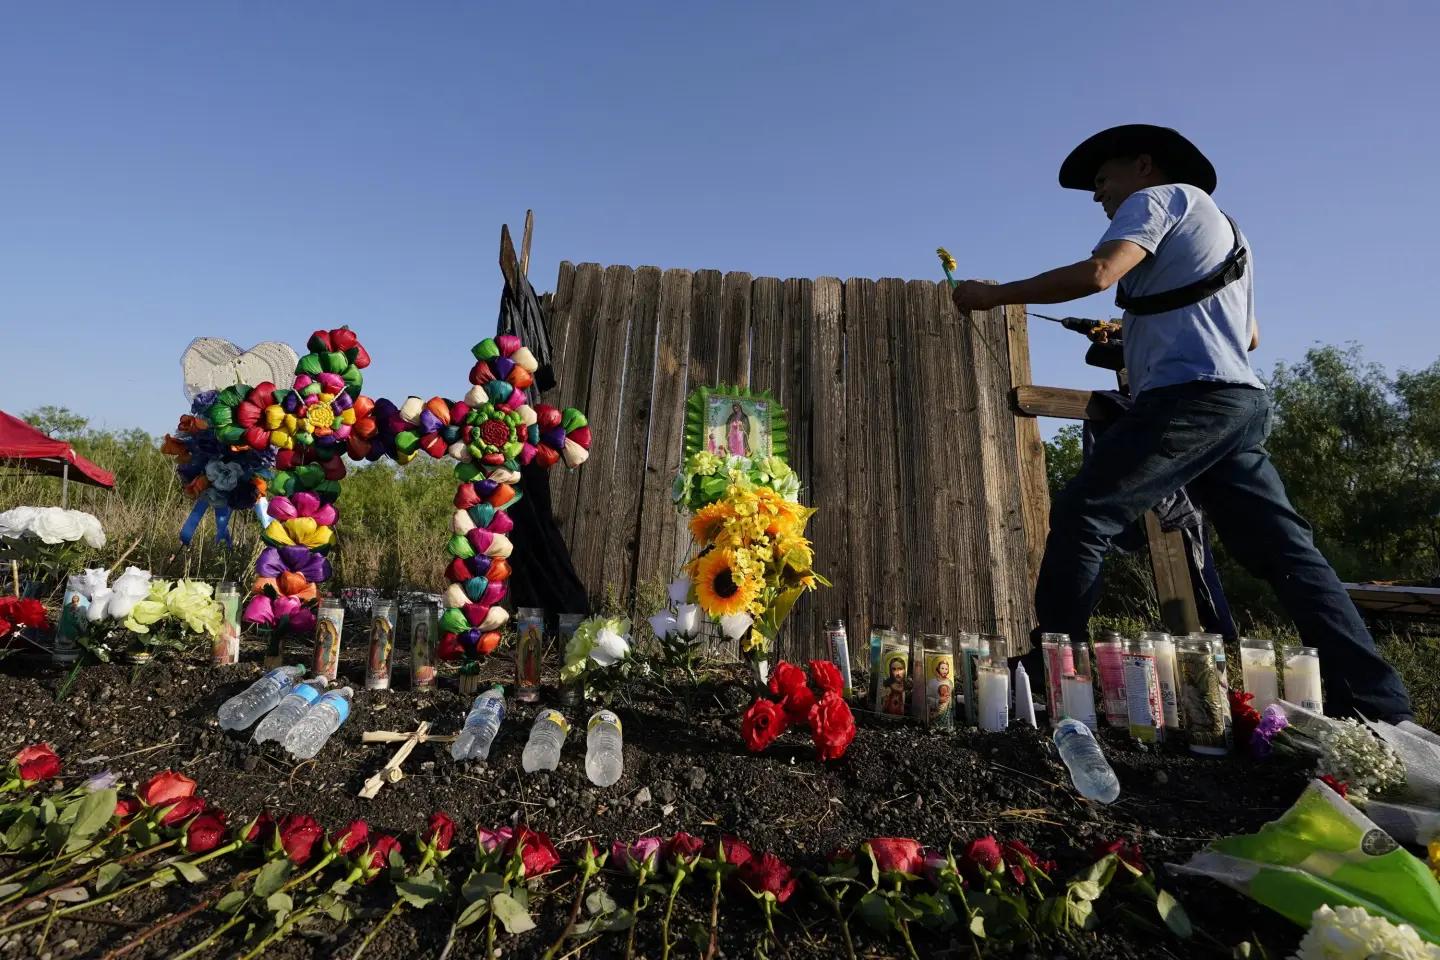 On anniversary of migrant deaths, San Antonio prelate prays for ‘respect’